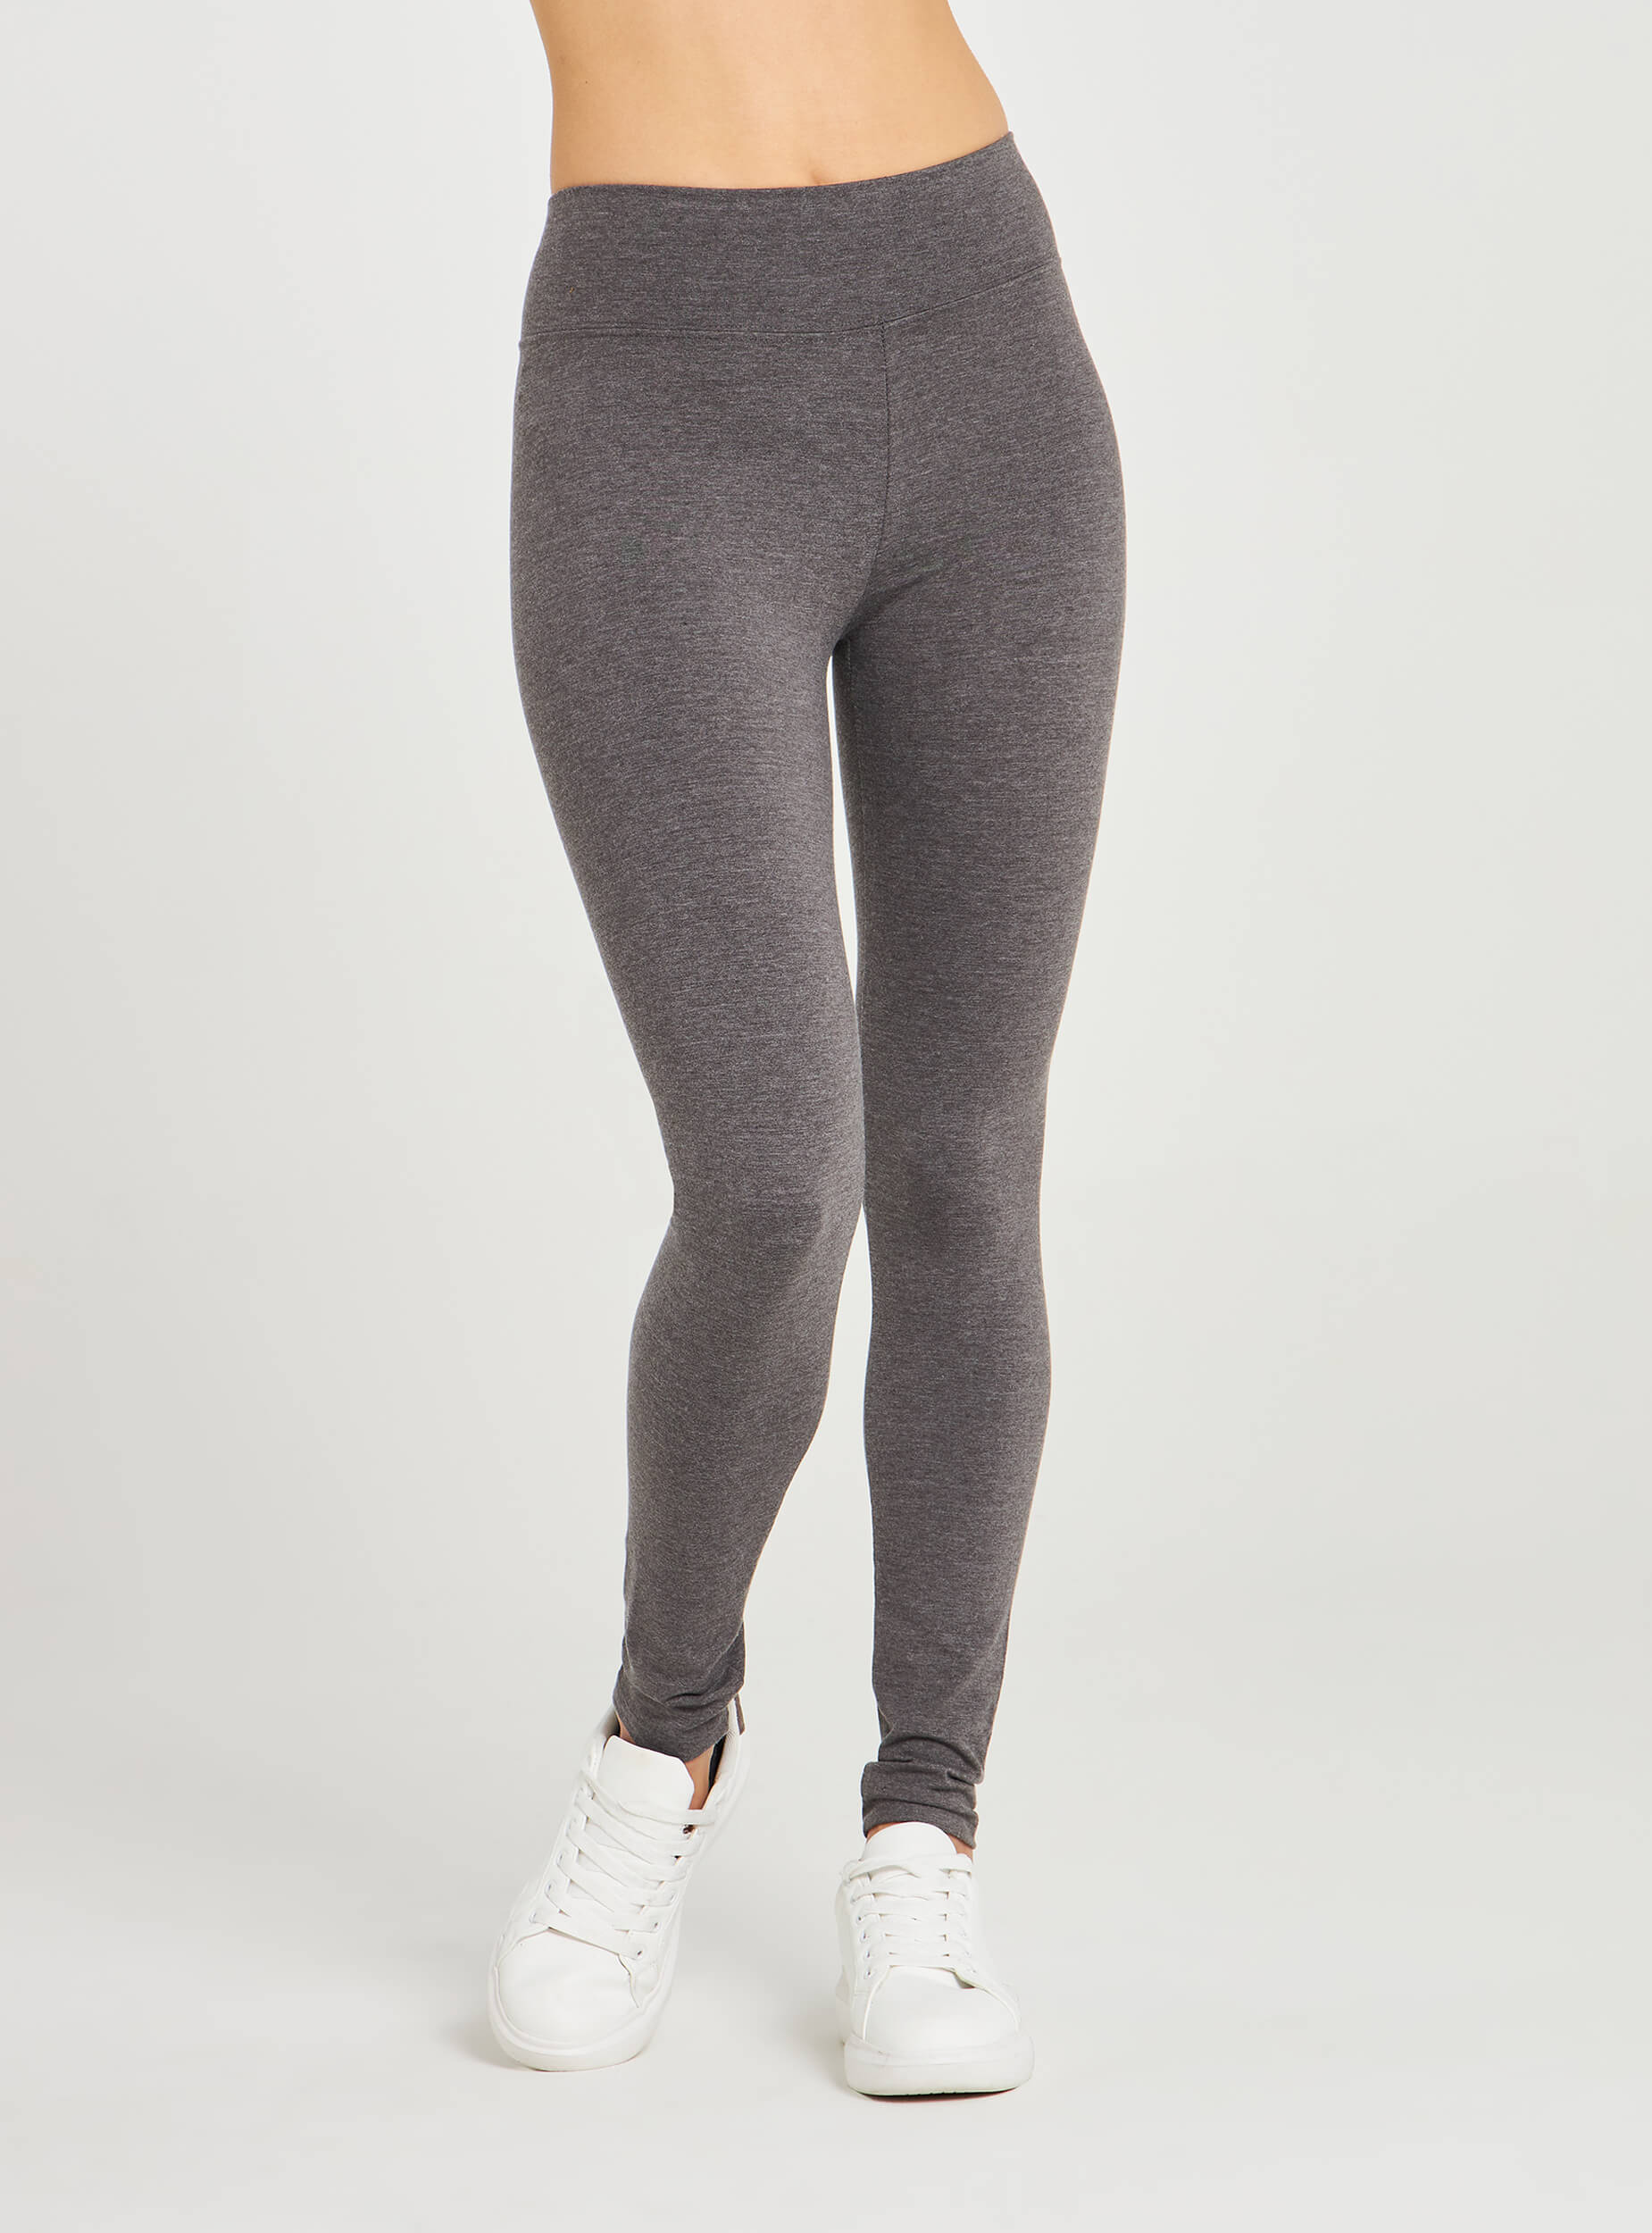 grey high waisted leggings